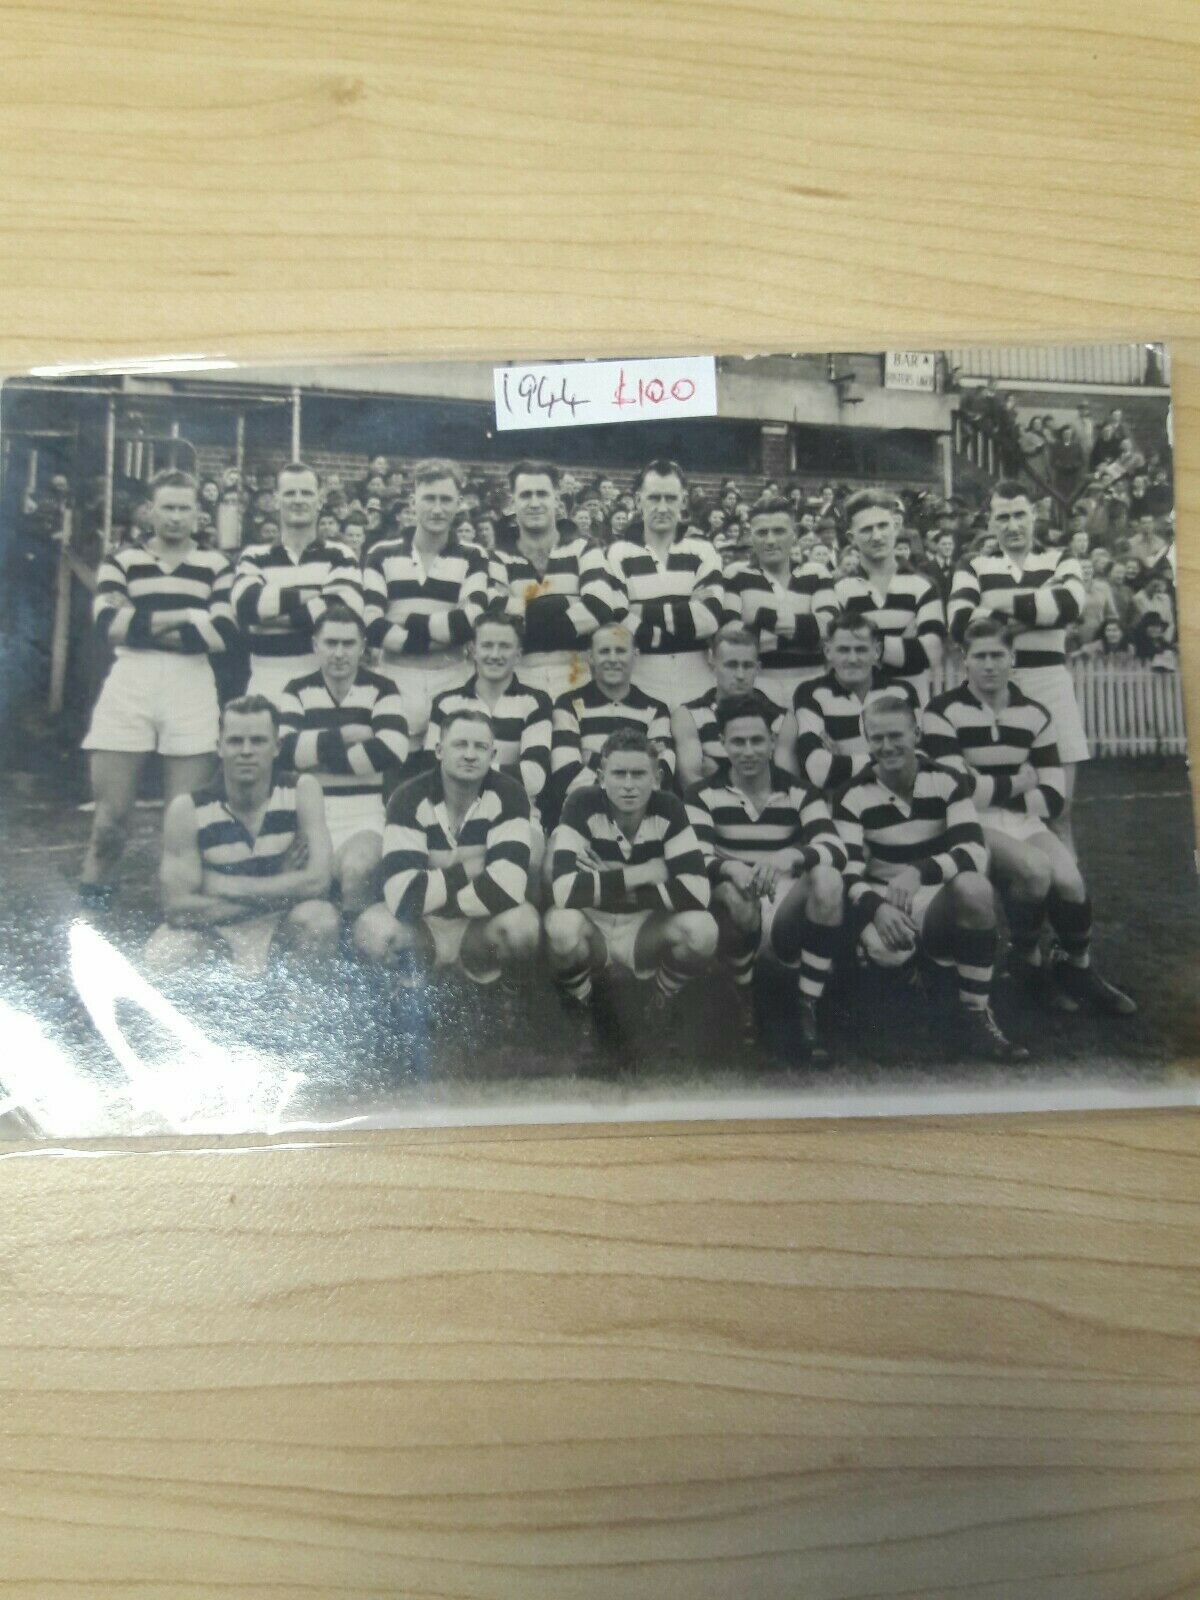 VFL 1944 Geelong Football Club Team Photo Postcard